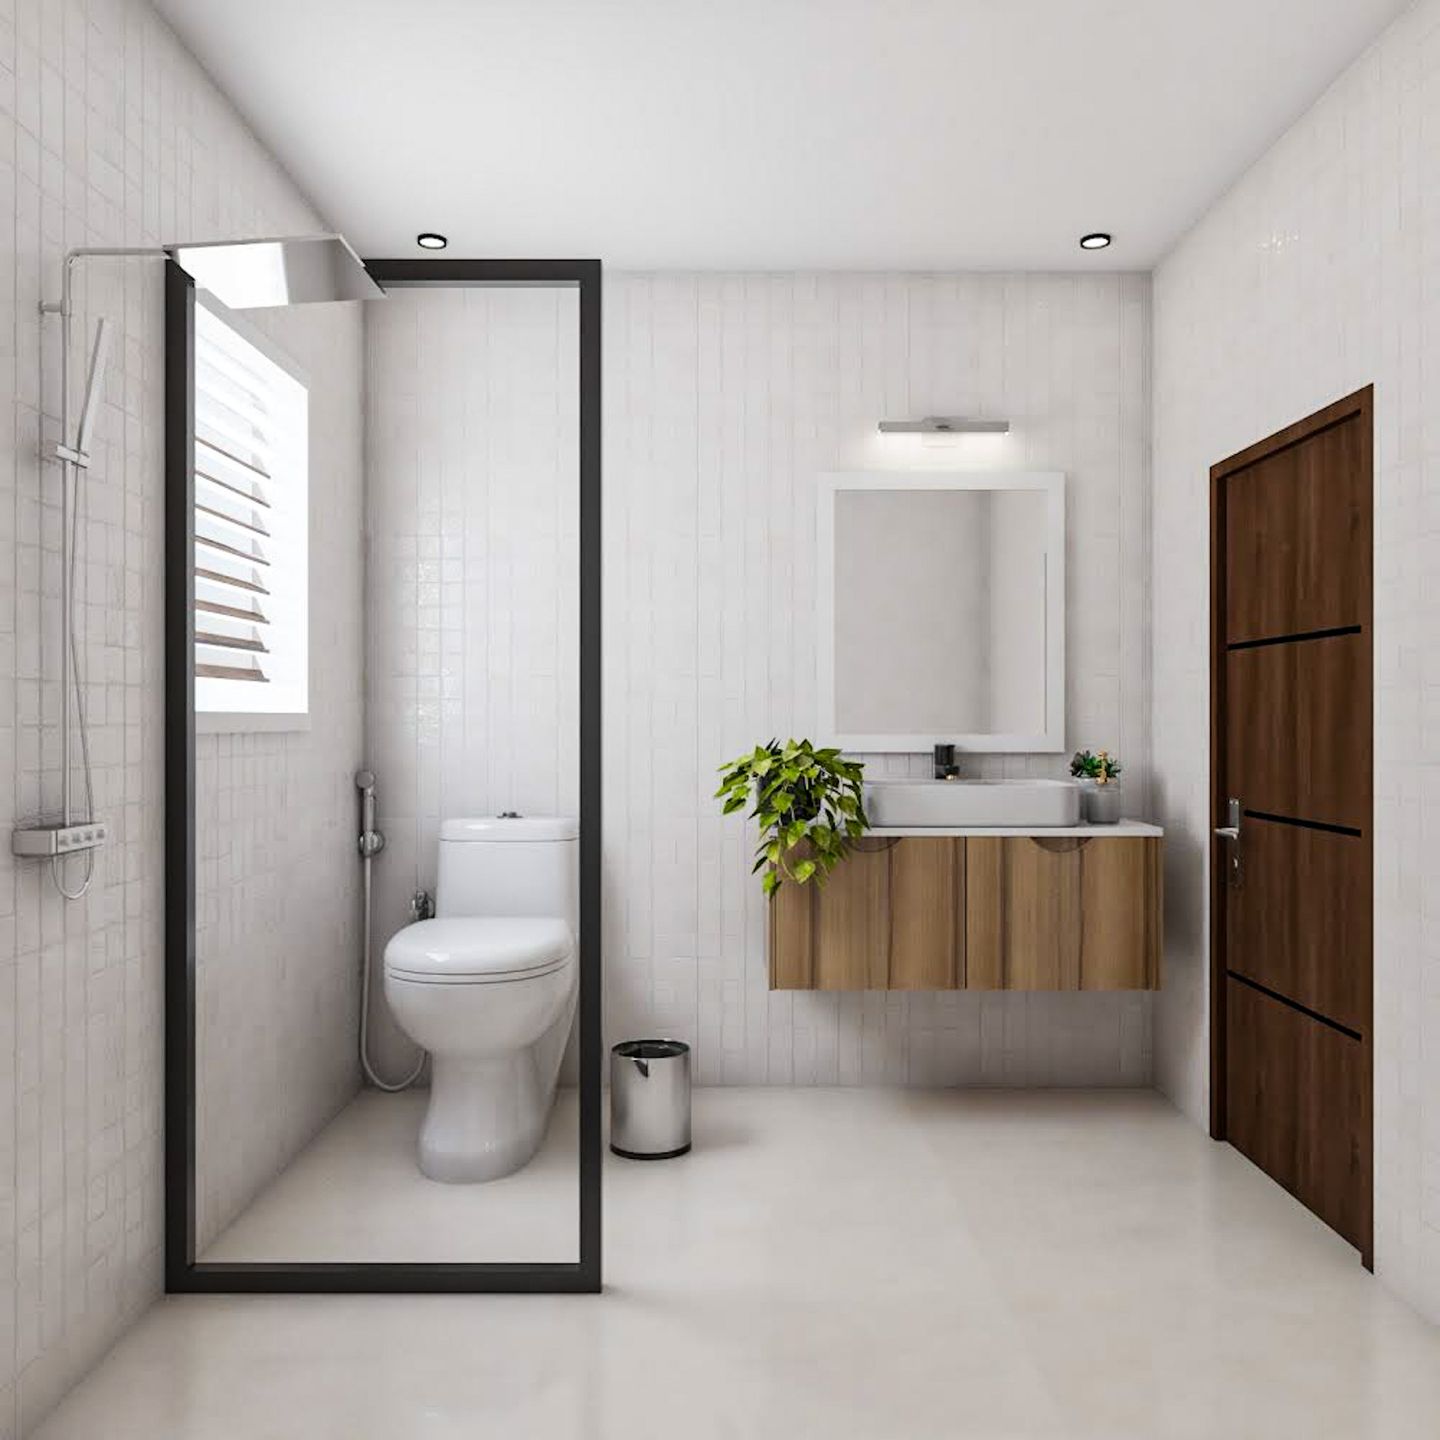 Minimalist Bathroom Design With A Wooden Vanity - Livspace